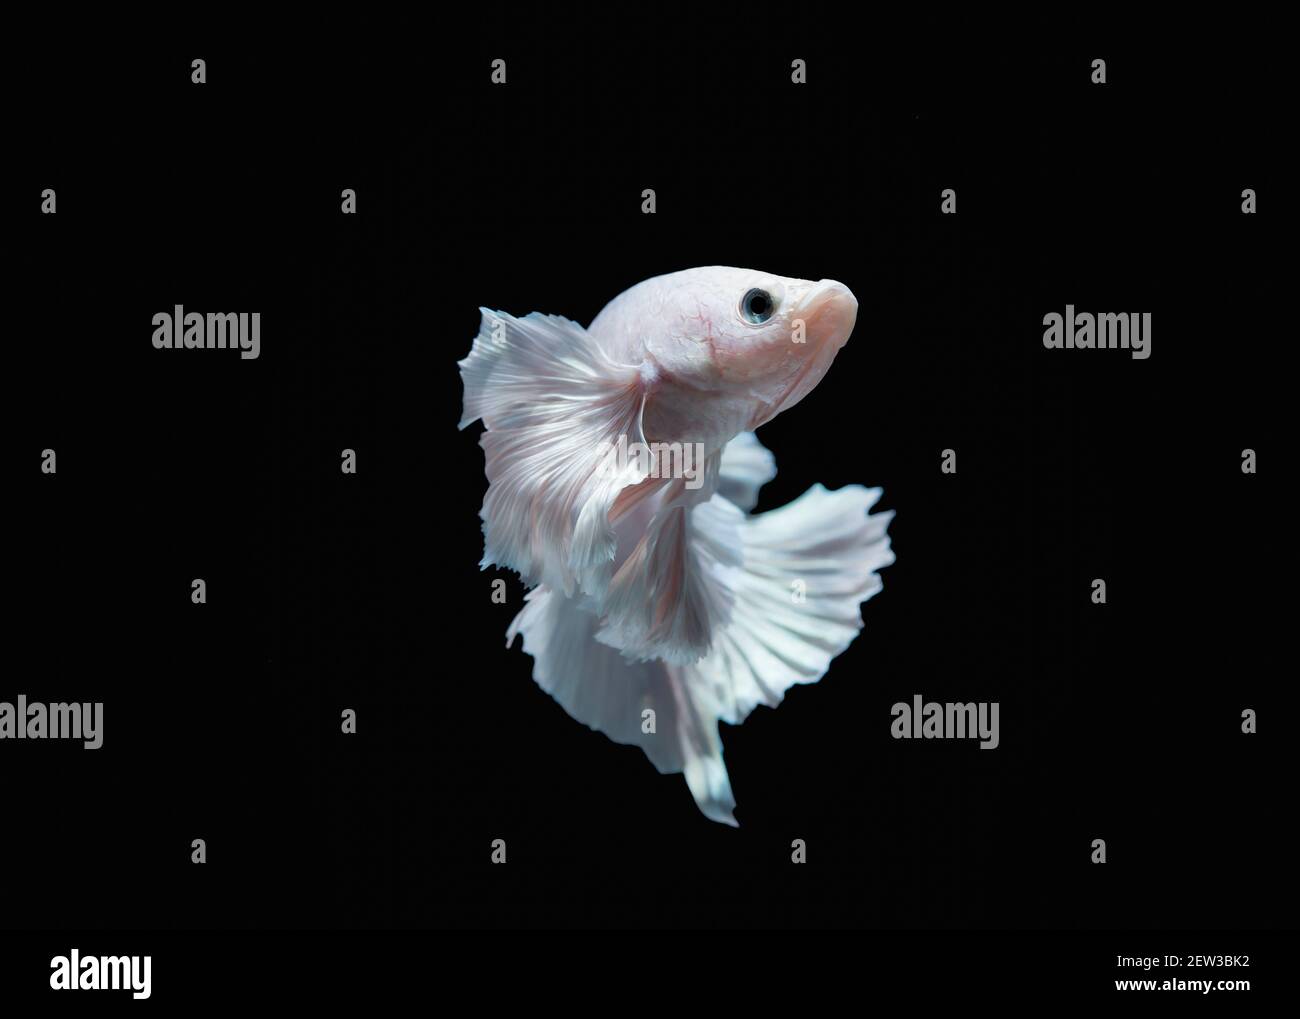 Betta o peces de lucha son bellamente blancos en primer plano, utilizados para hornear imágenes e imágenes de fondo. Foto de stock